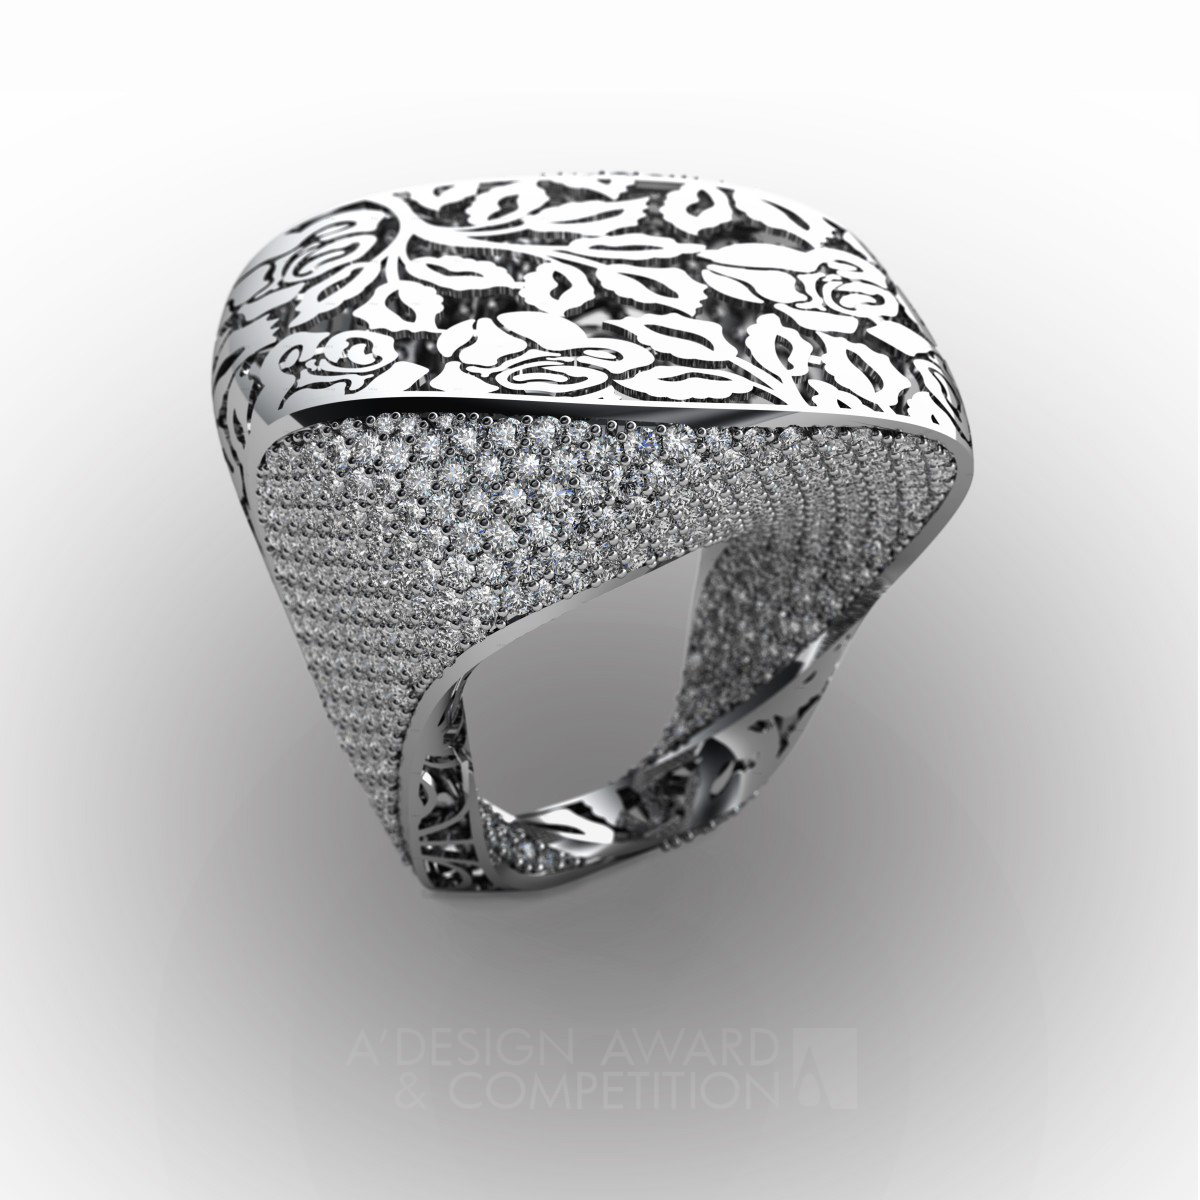 Twisty Ring Jewelry ring by Mohammad Adyalchi